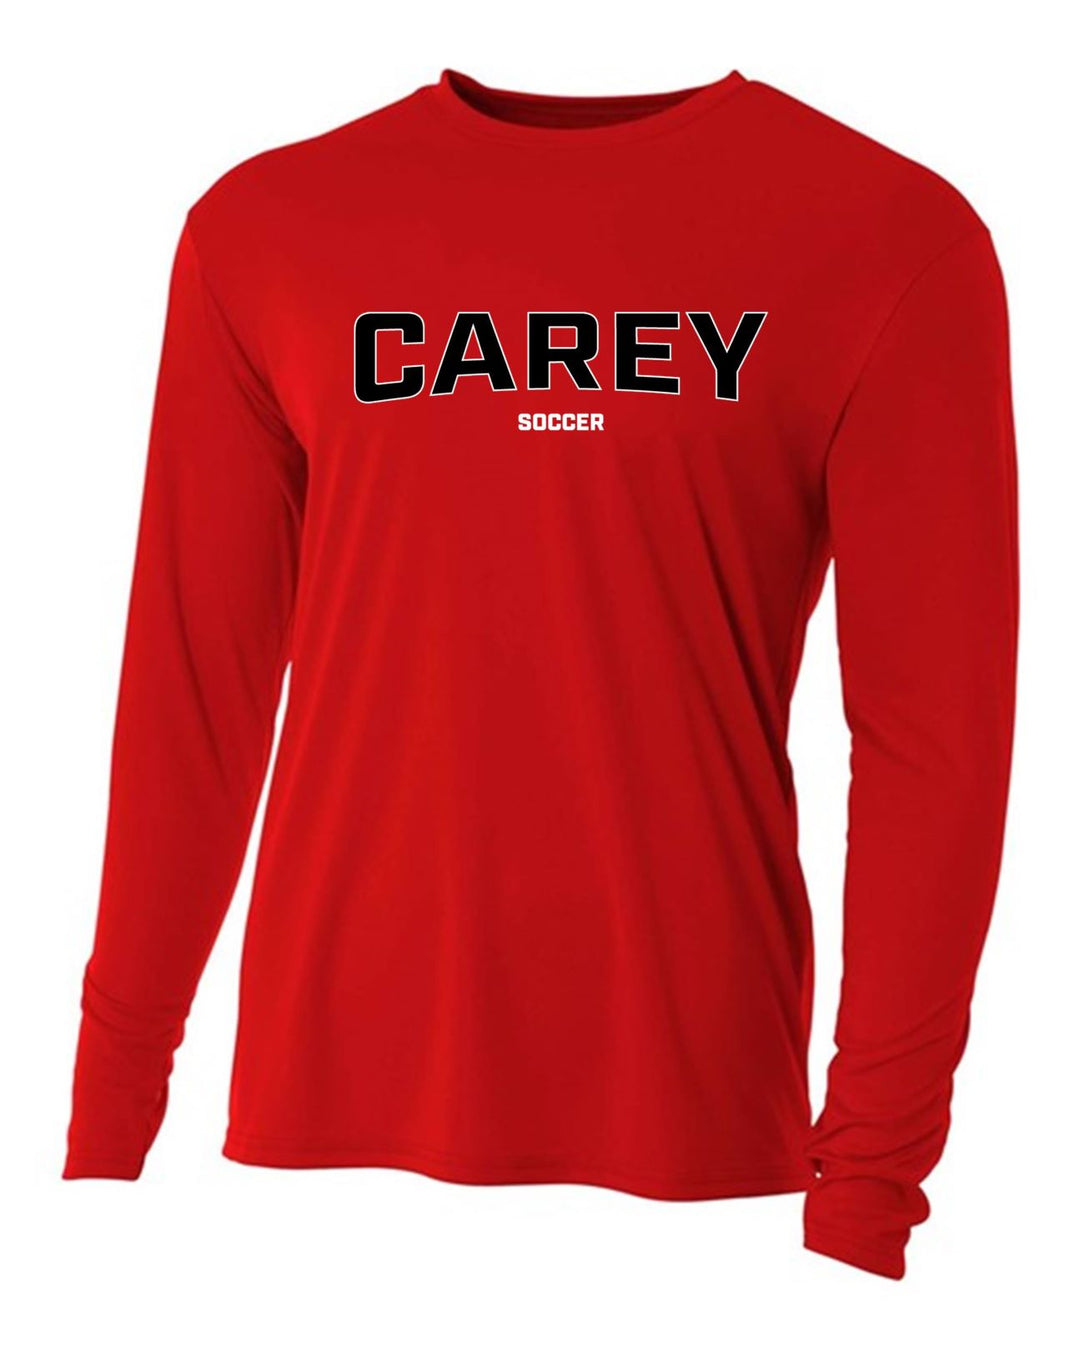 WCU Soccer Men's Long-Sleeve Performance Shirt WCU Soccer Red CAREY - Third Coast Soccer